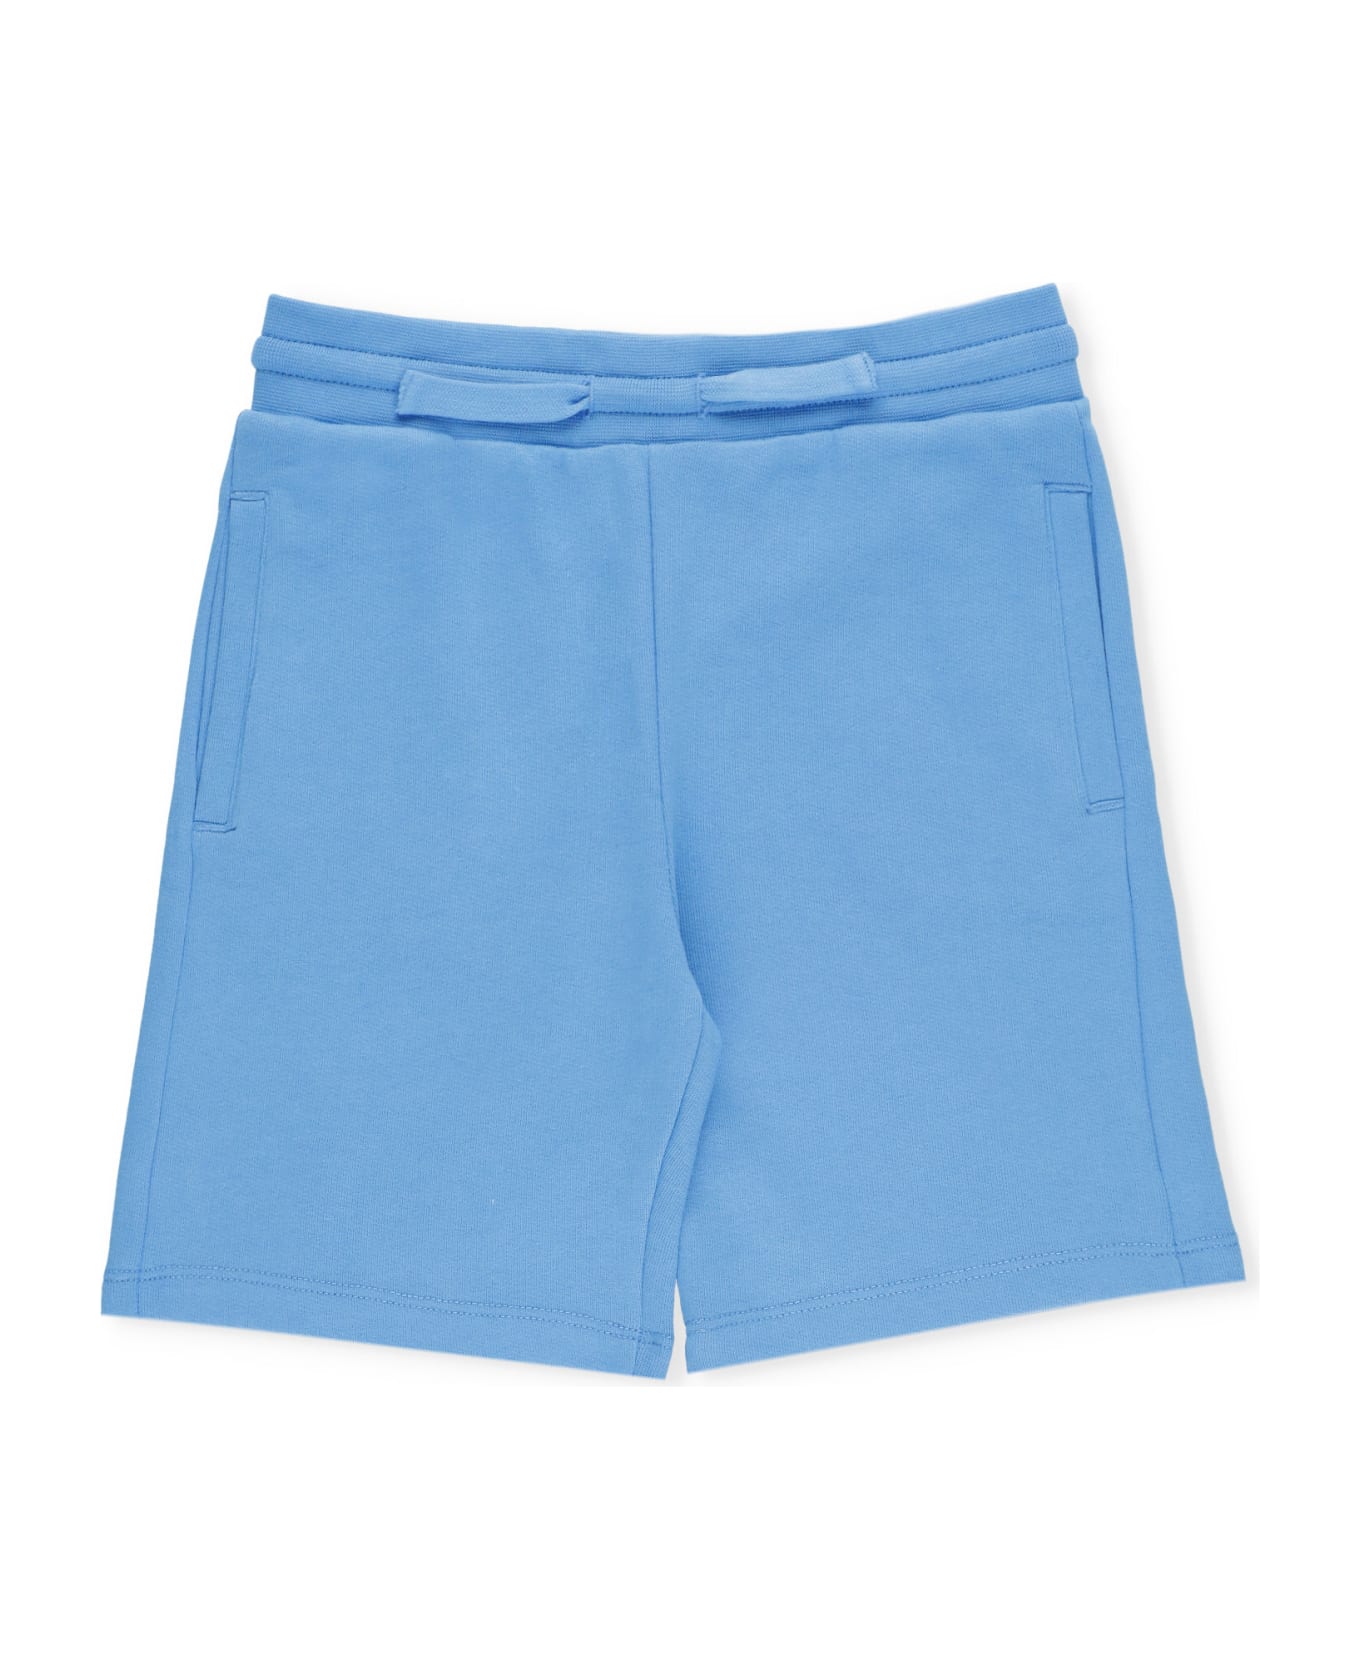 Stella McCartney Cotton Shorts - Light Blue ボトムス